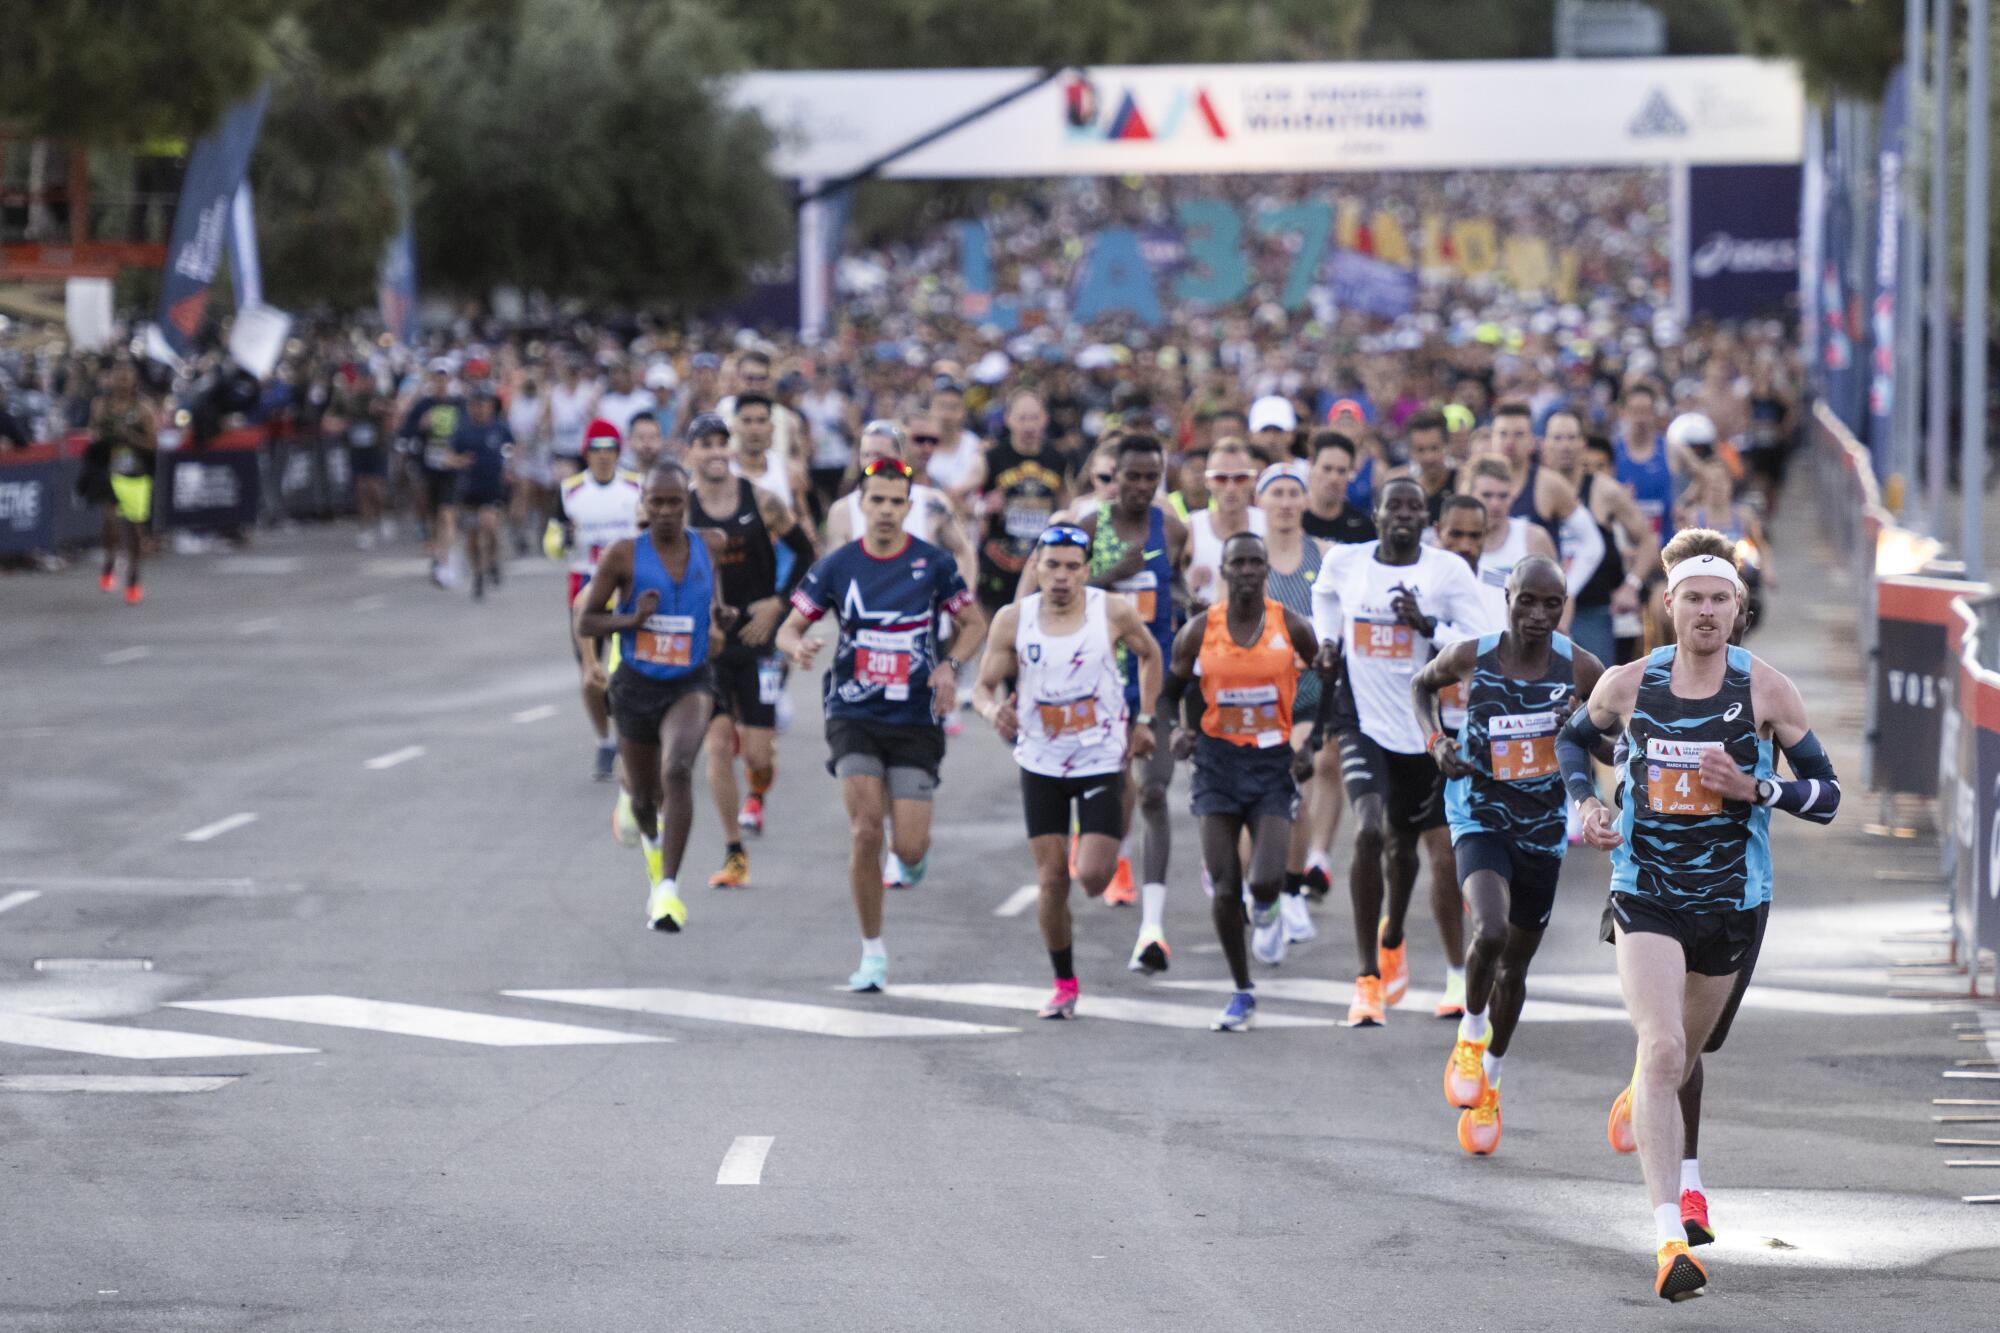 A crowd of marathon runners